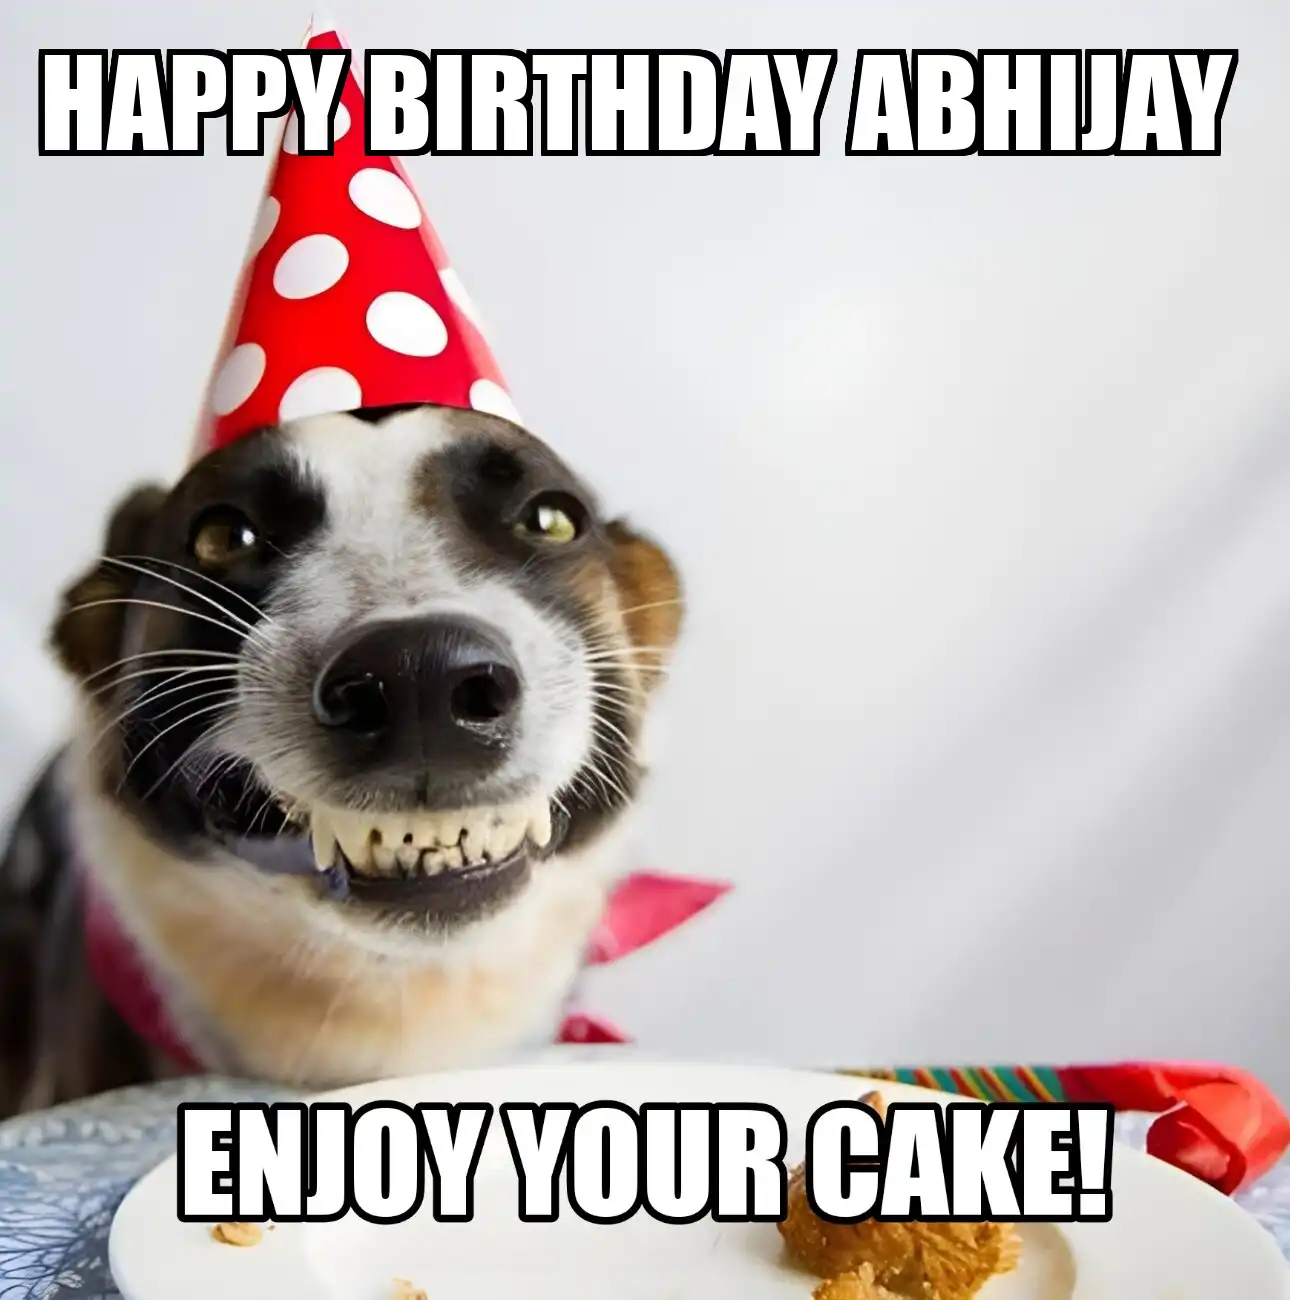 Happy Birthday Abhijay Enjoy Your Cake Dog Meme